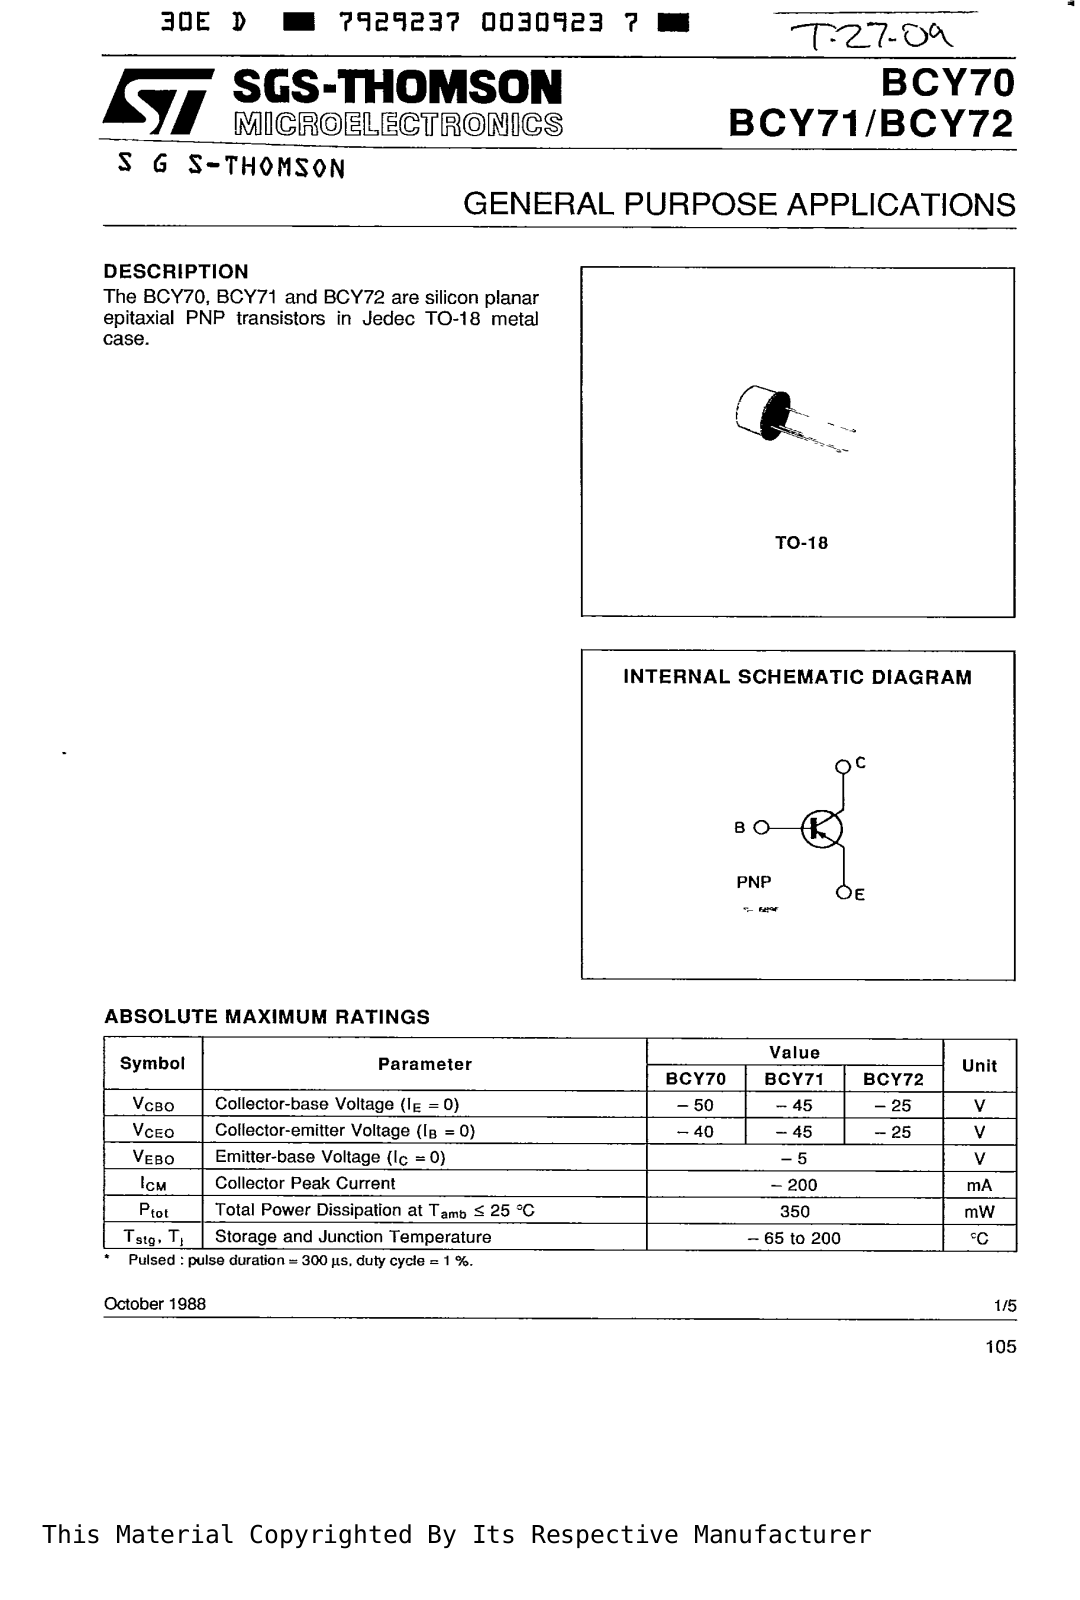 SGS Thomson Microelectronics BCY70 Datasheet